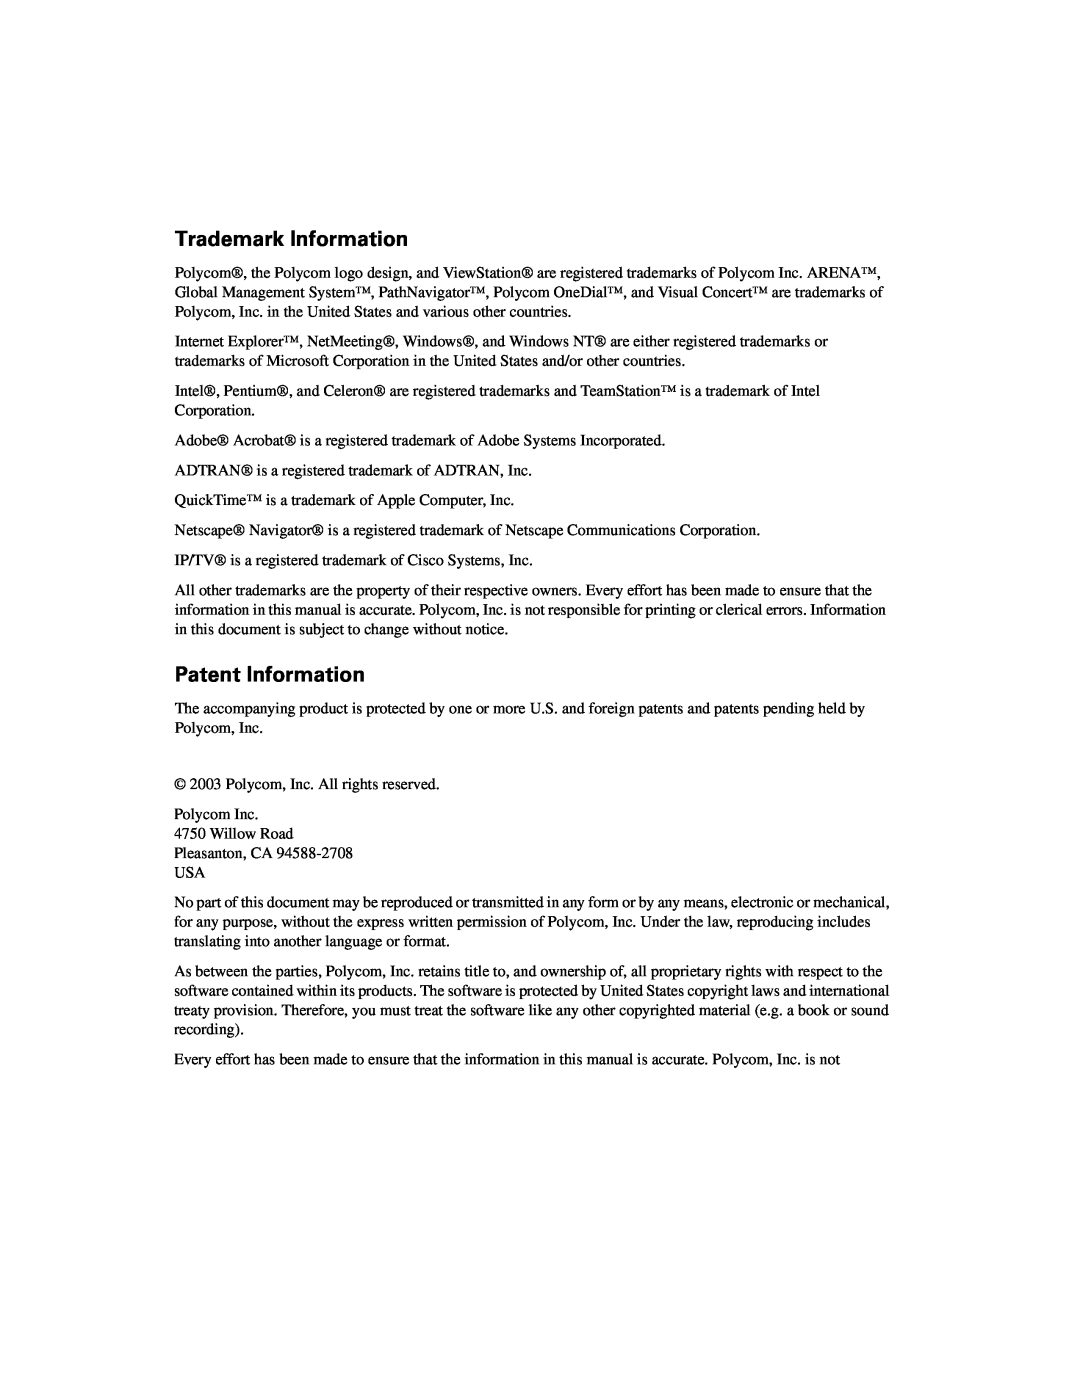 Polycom VIEWSTATION EX manual Trademark Information, Patent Information 